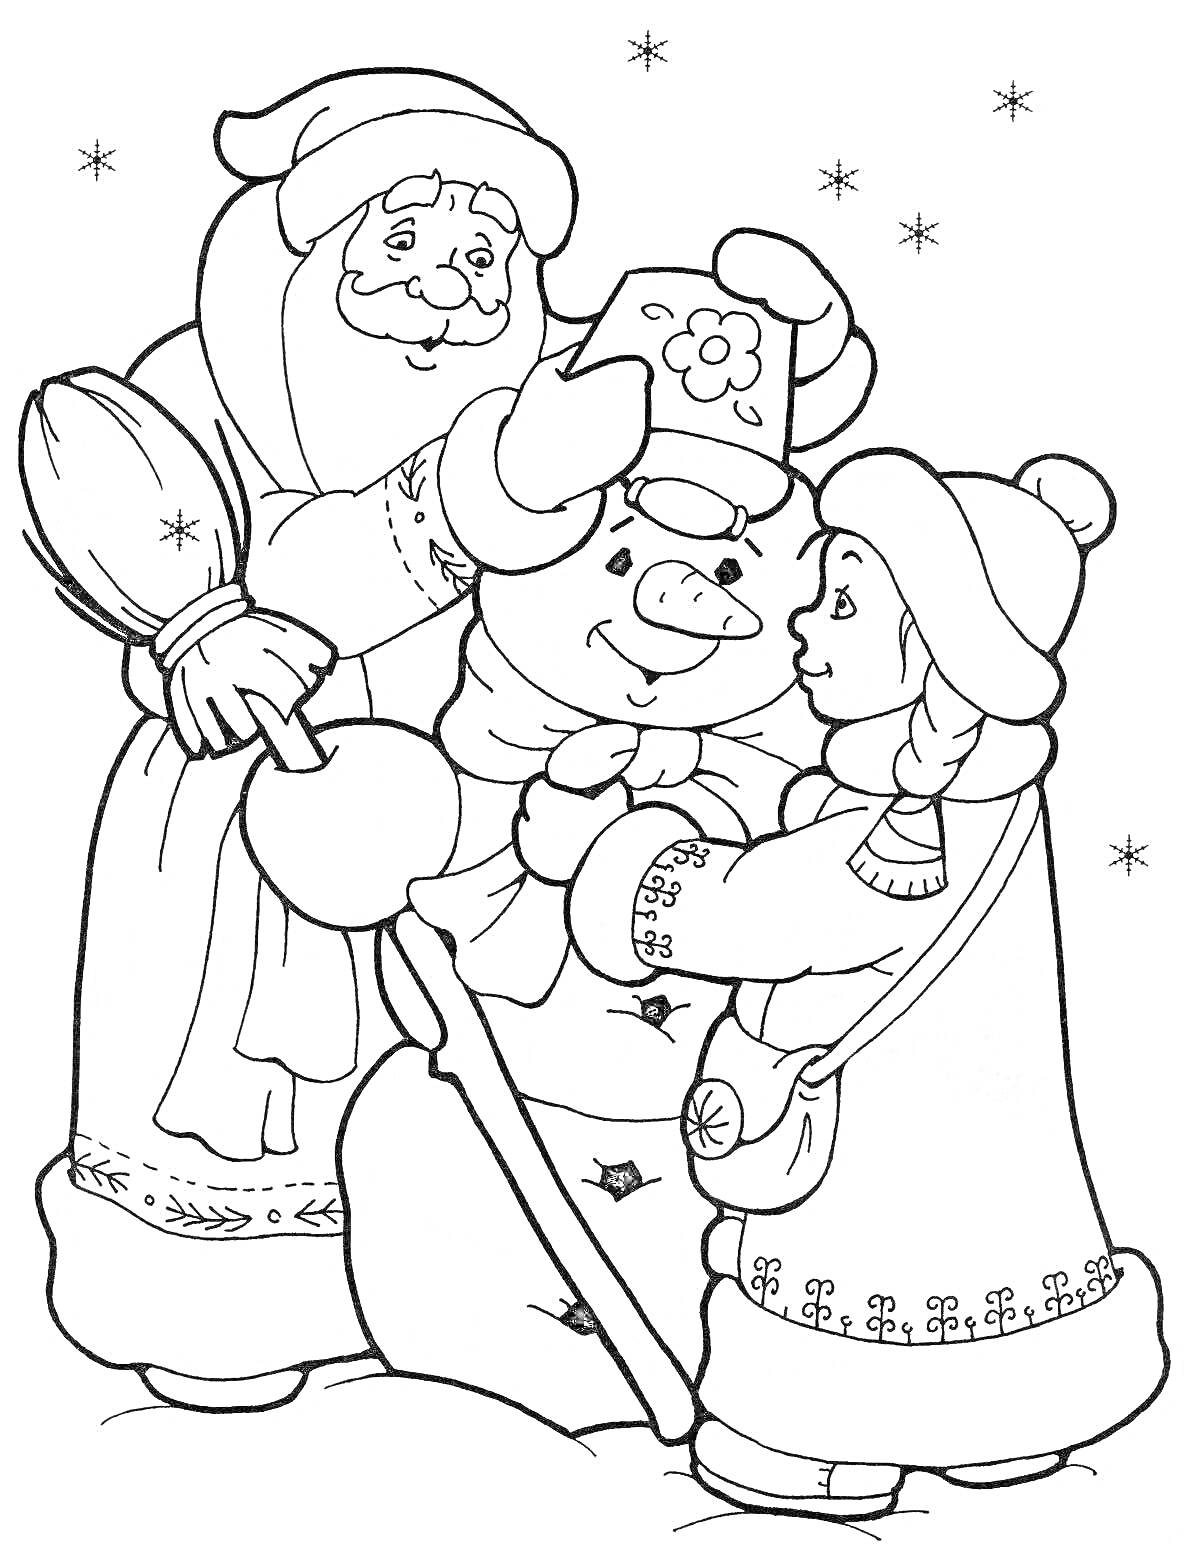 Раскраска Дед Мороз, Снегурочка и снеговик с метлой, снежинки